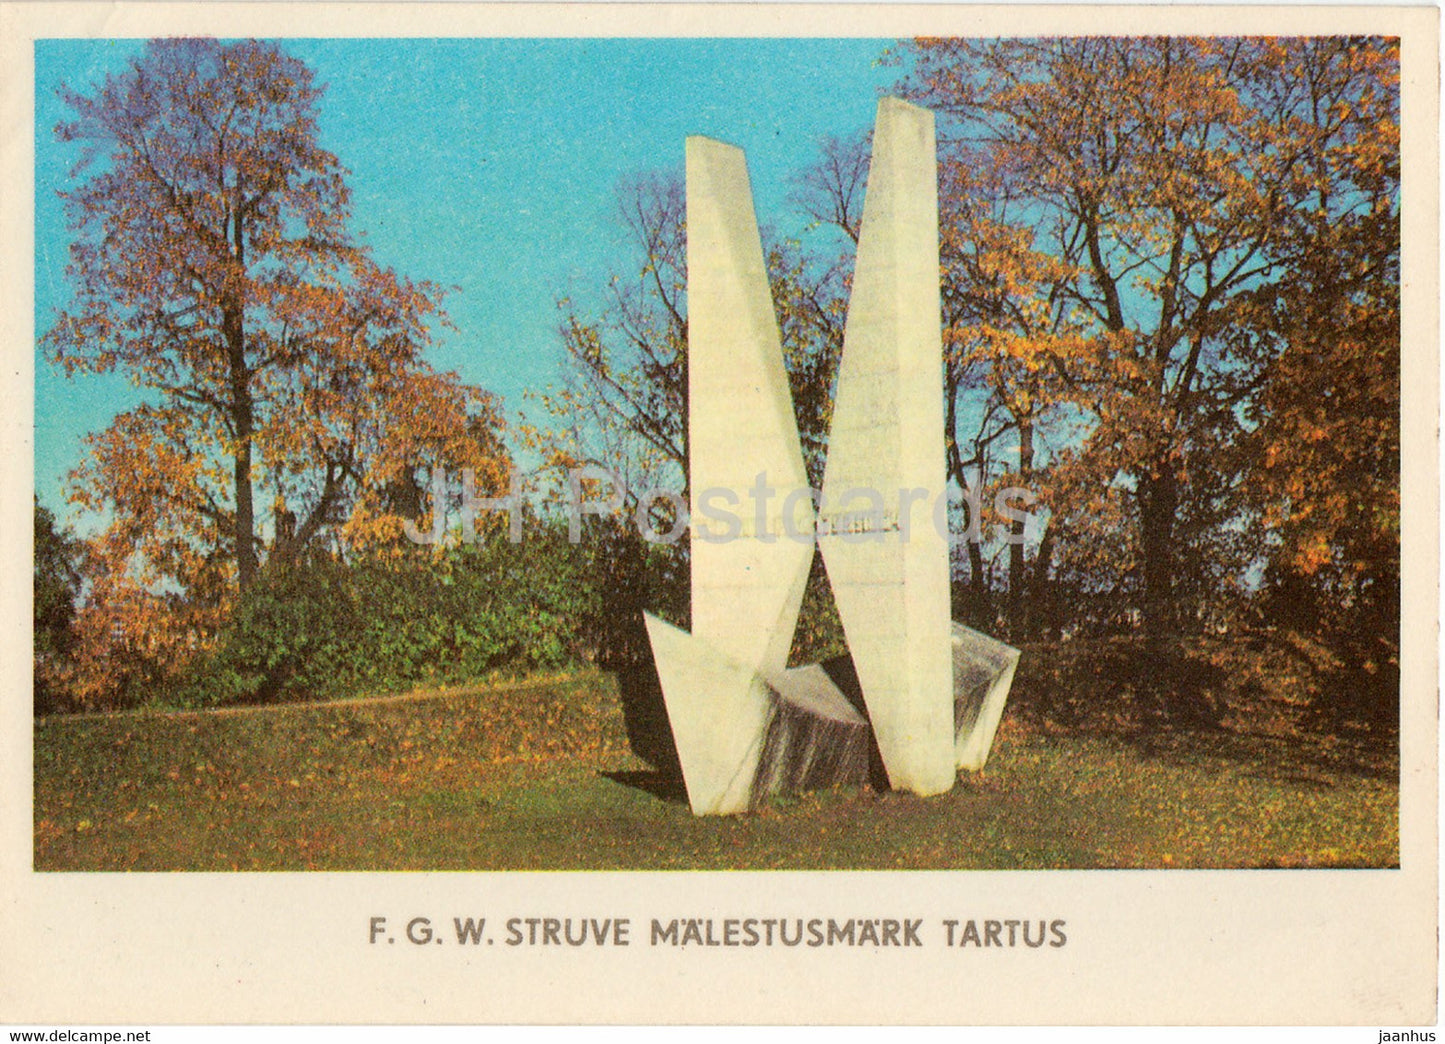 Tartu - Baltic German astronomer Struve Memorial - 1977 - Estonia USSR - unused - JH Postcards